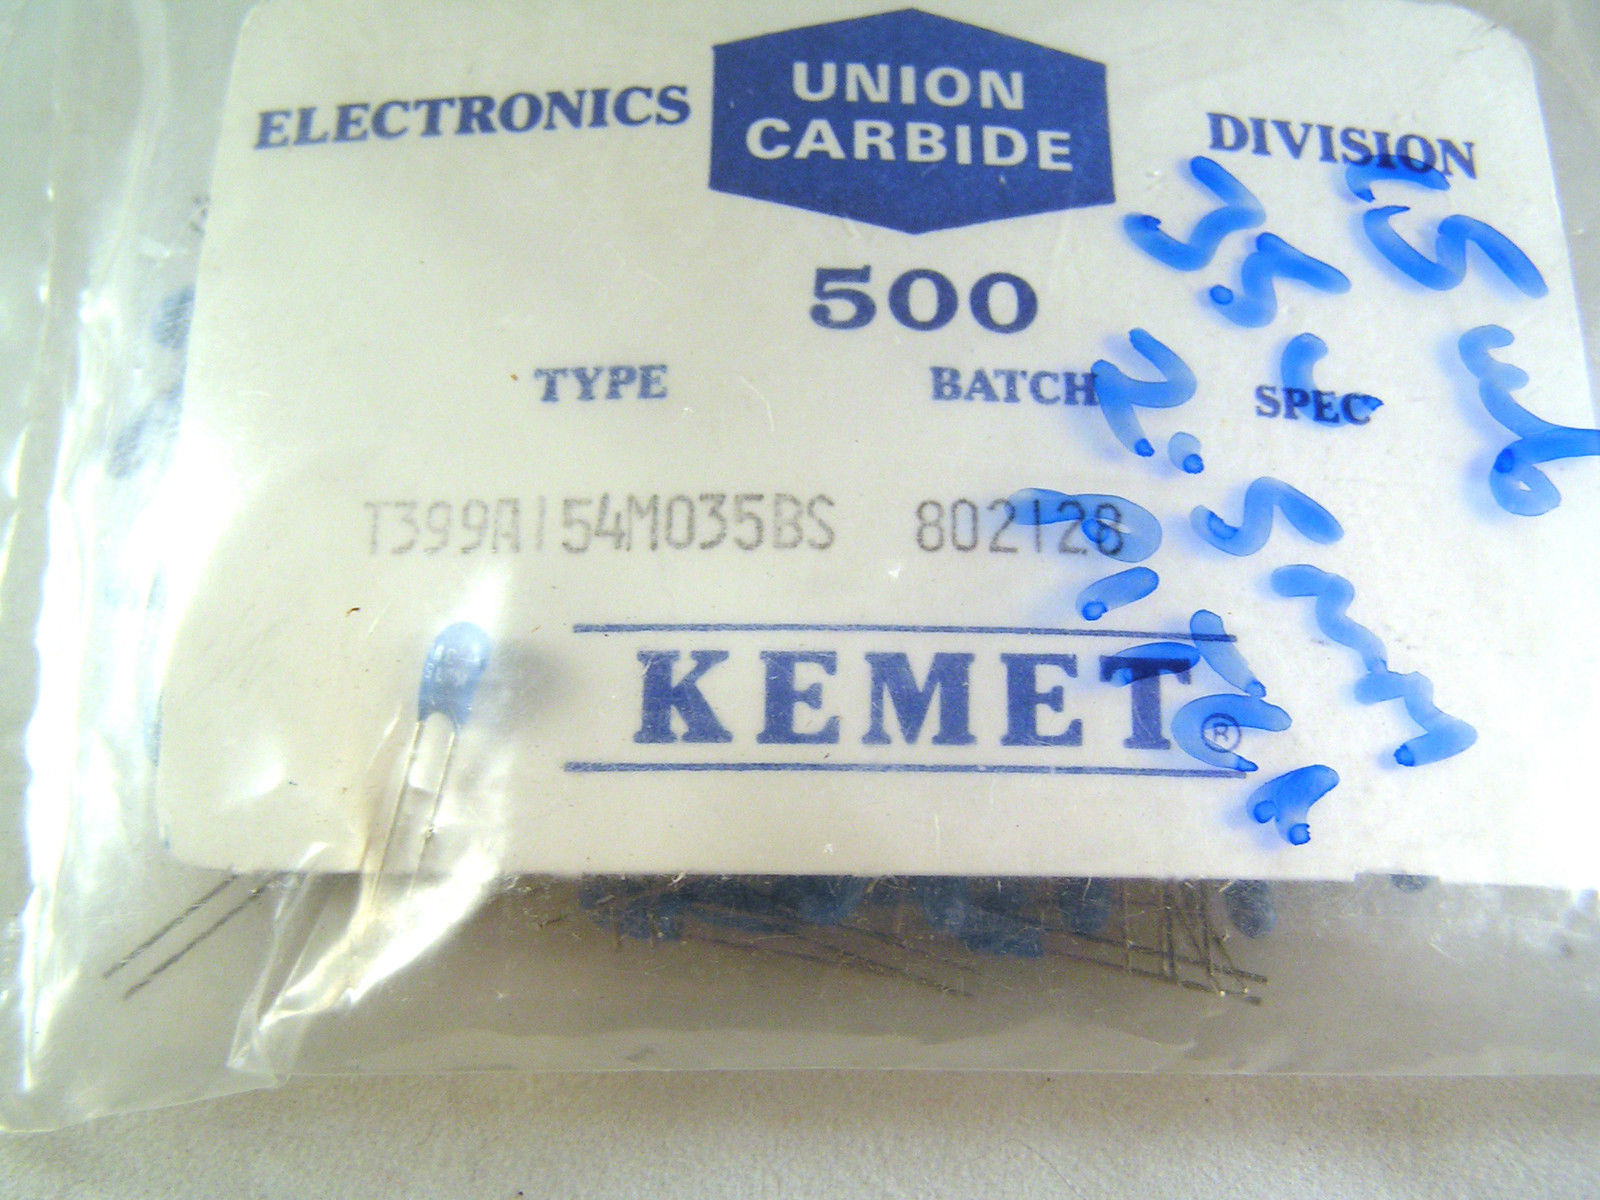 Kemet feux Tantalum Bead Condensateurs 150nf 35 V Pitch 2.5 mm T48 10 pieces OM1229